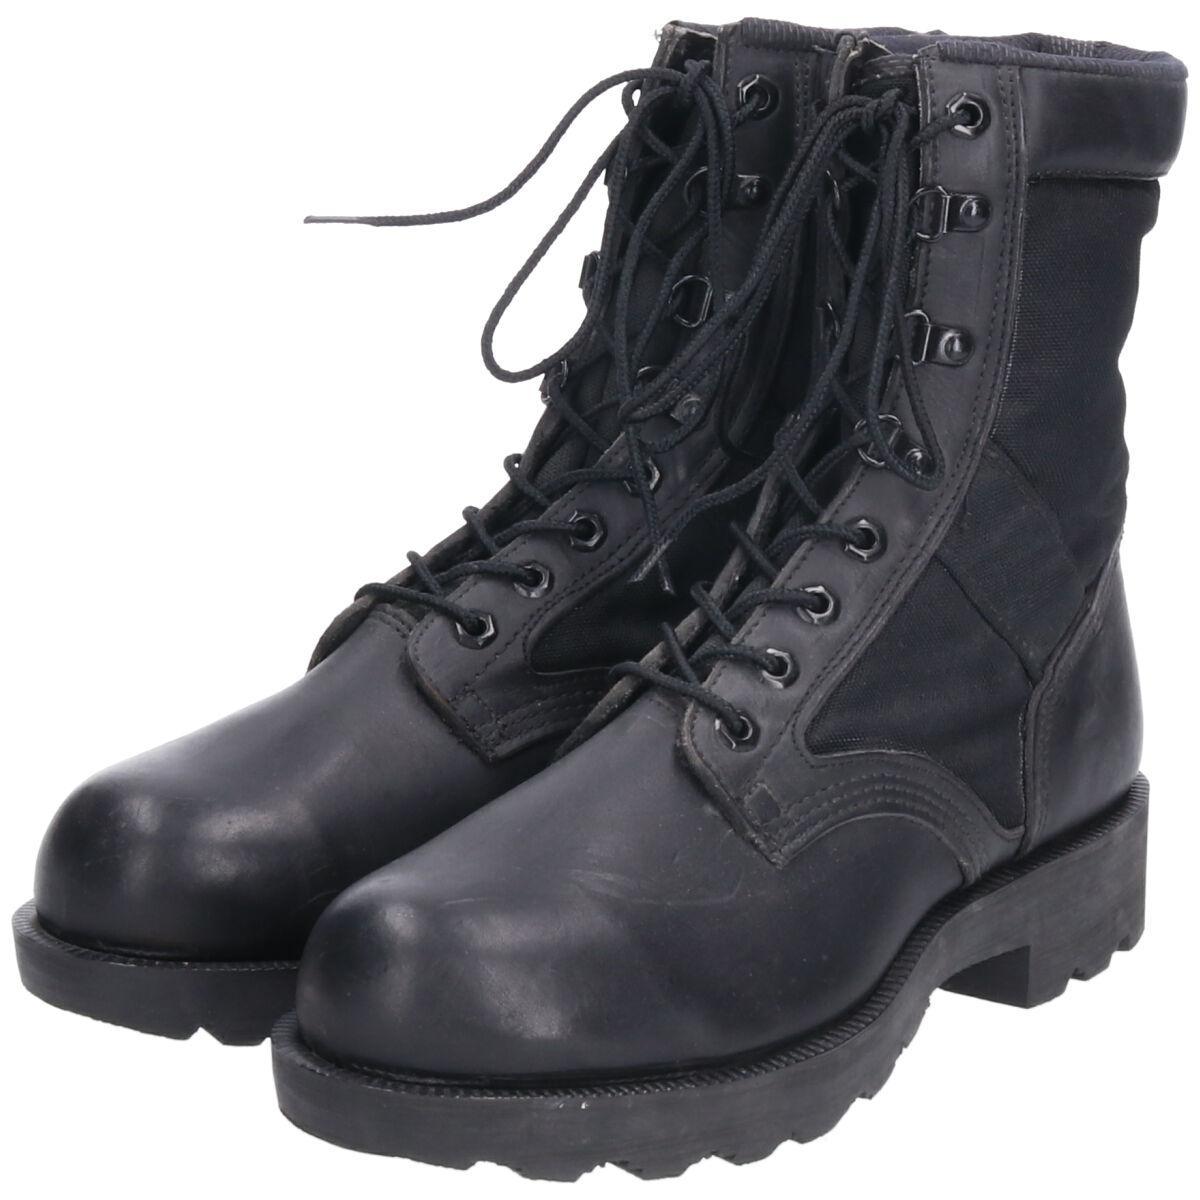 lehigh work boots